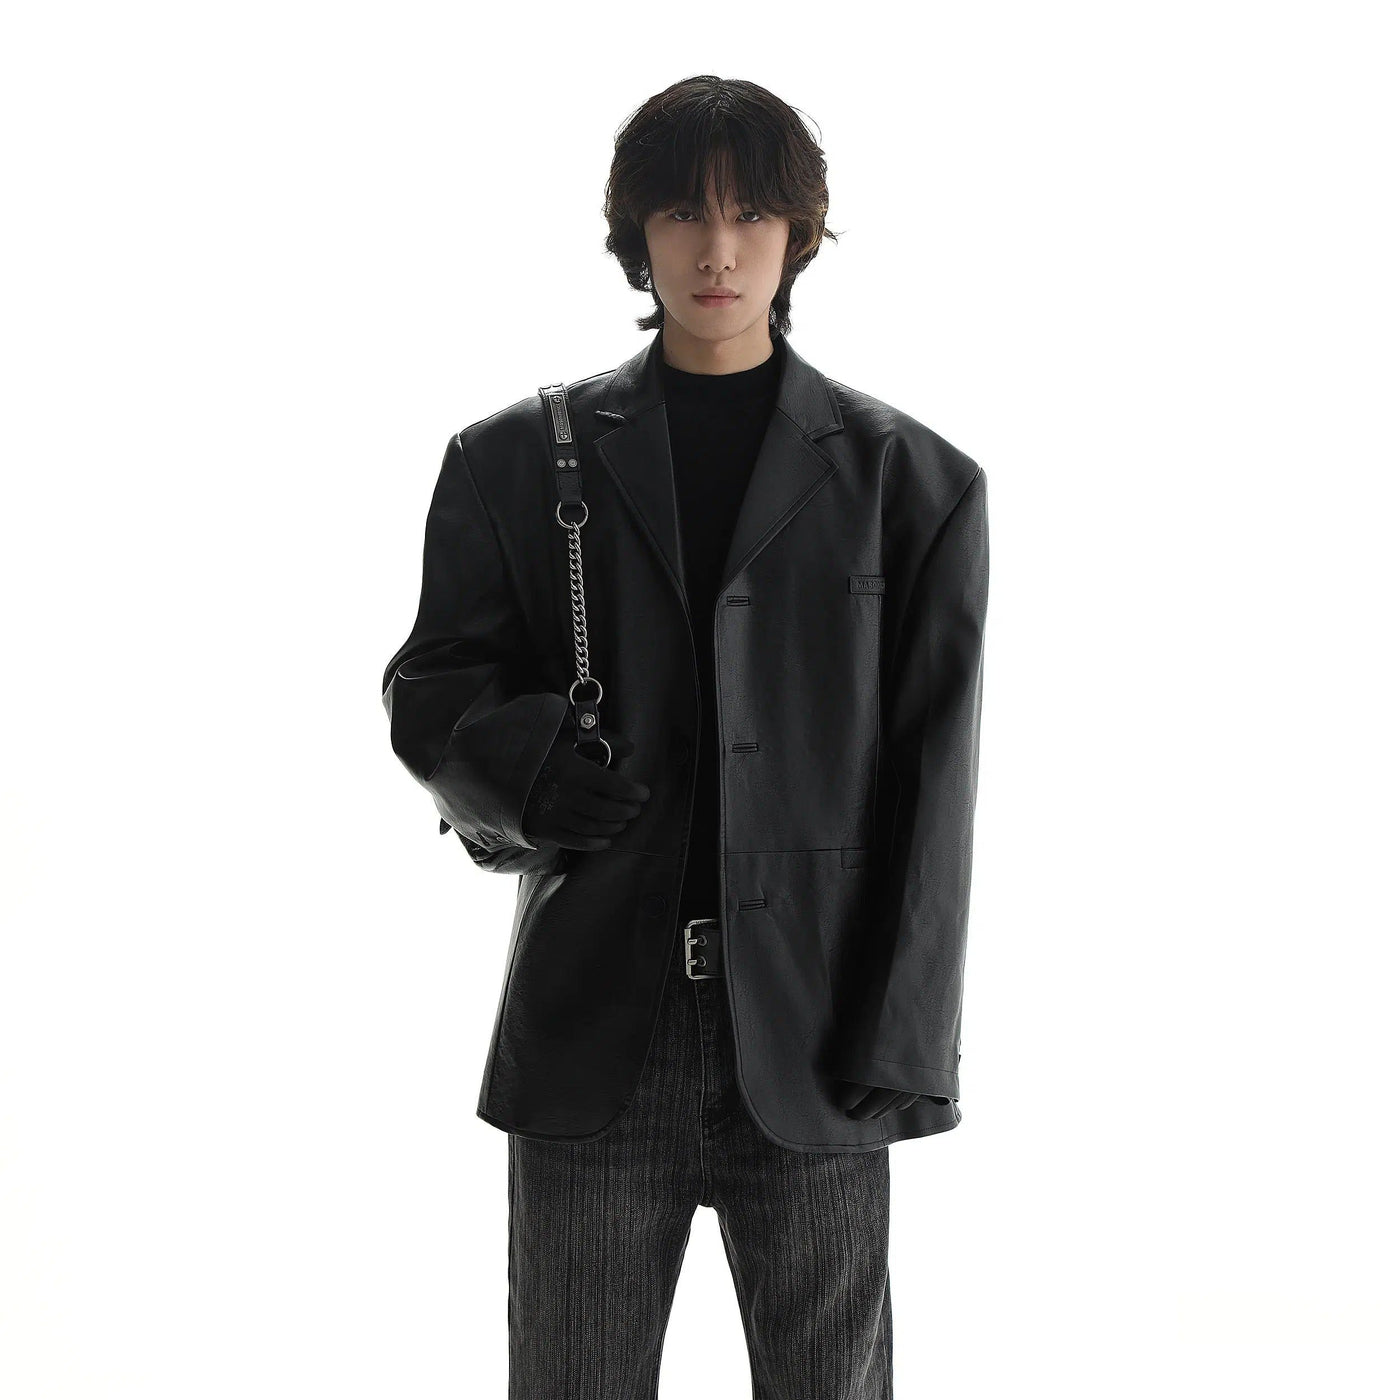 Wide Shoulder PU Leather Jacket Korean Street Fashion Jacket By Mason Prince Shop Online at OH Vault